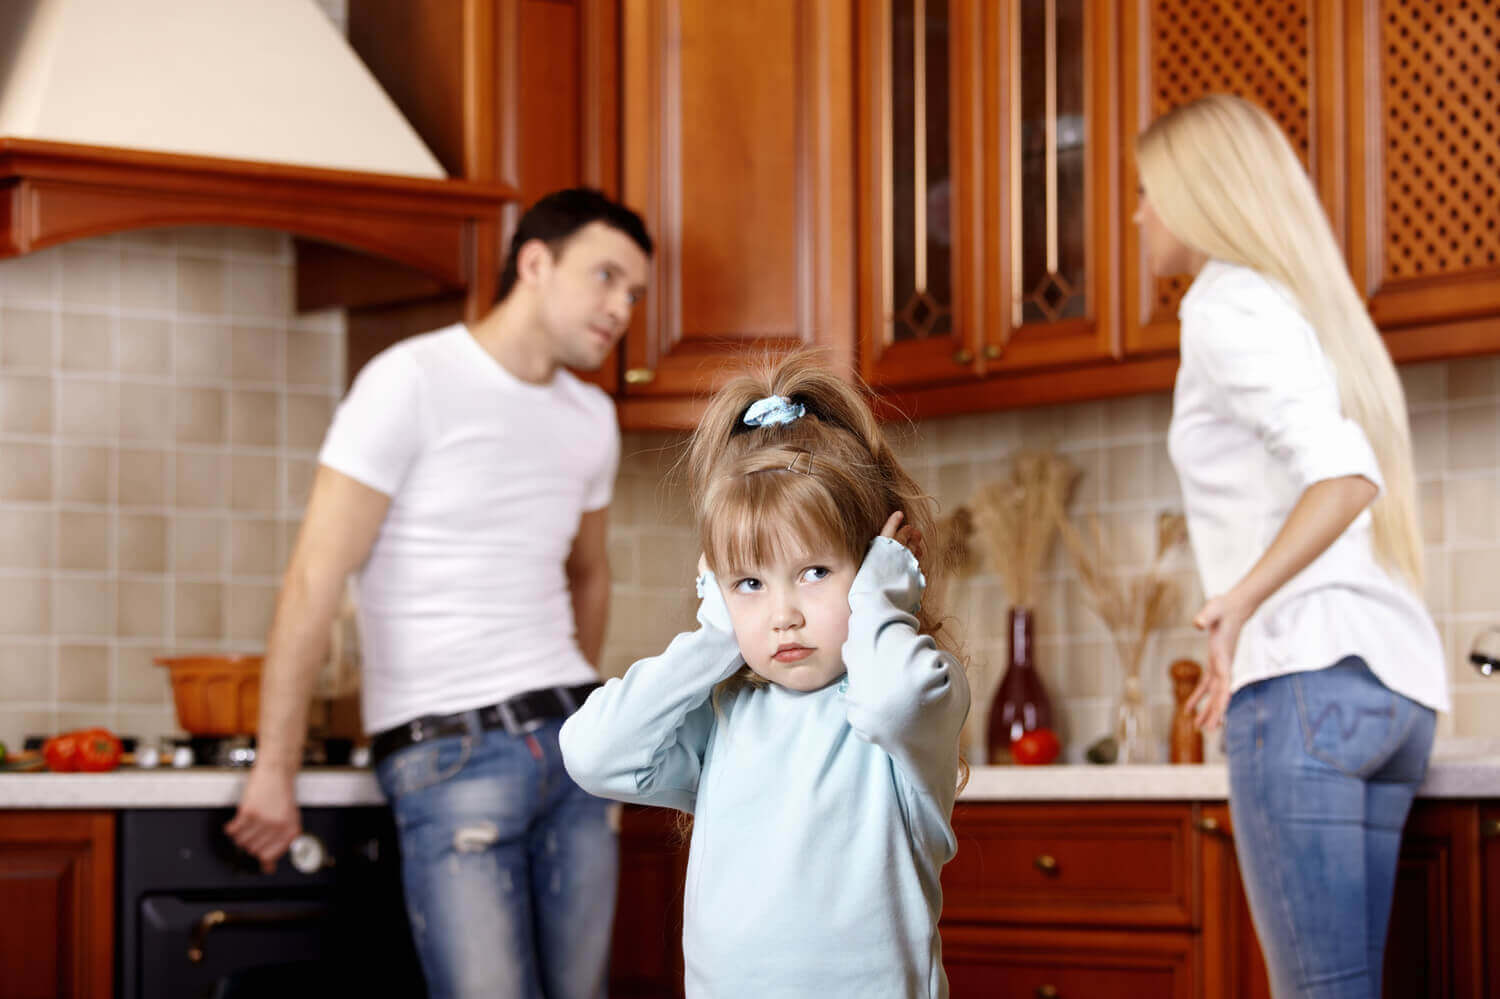 Parents’ Bad Mood Can Affect Children’s Emotional Development